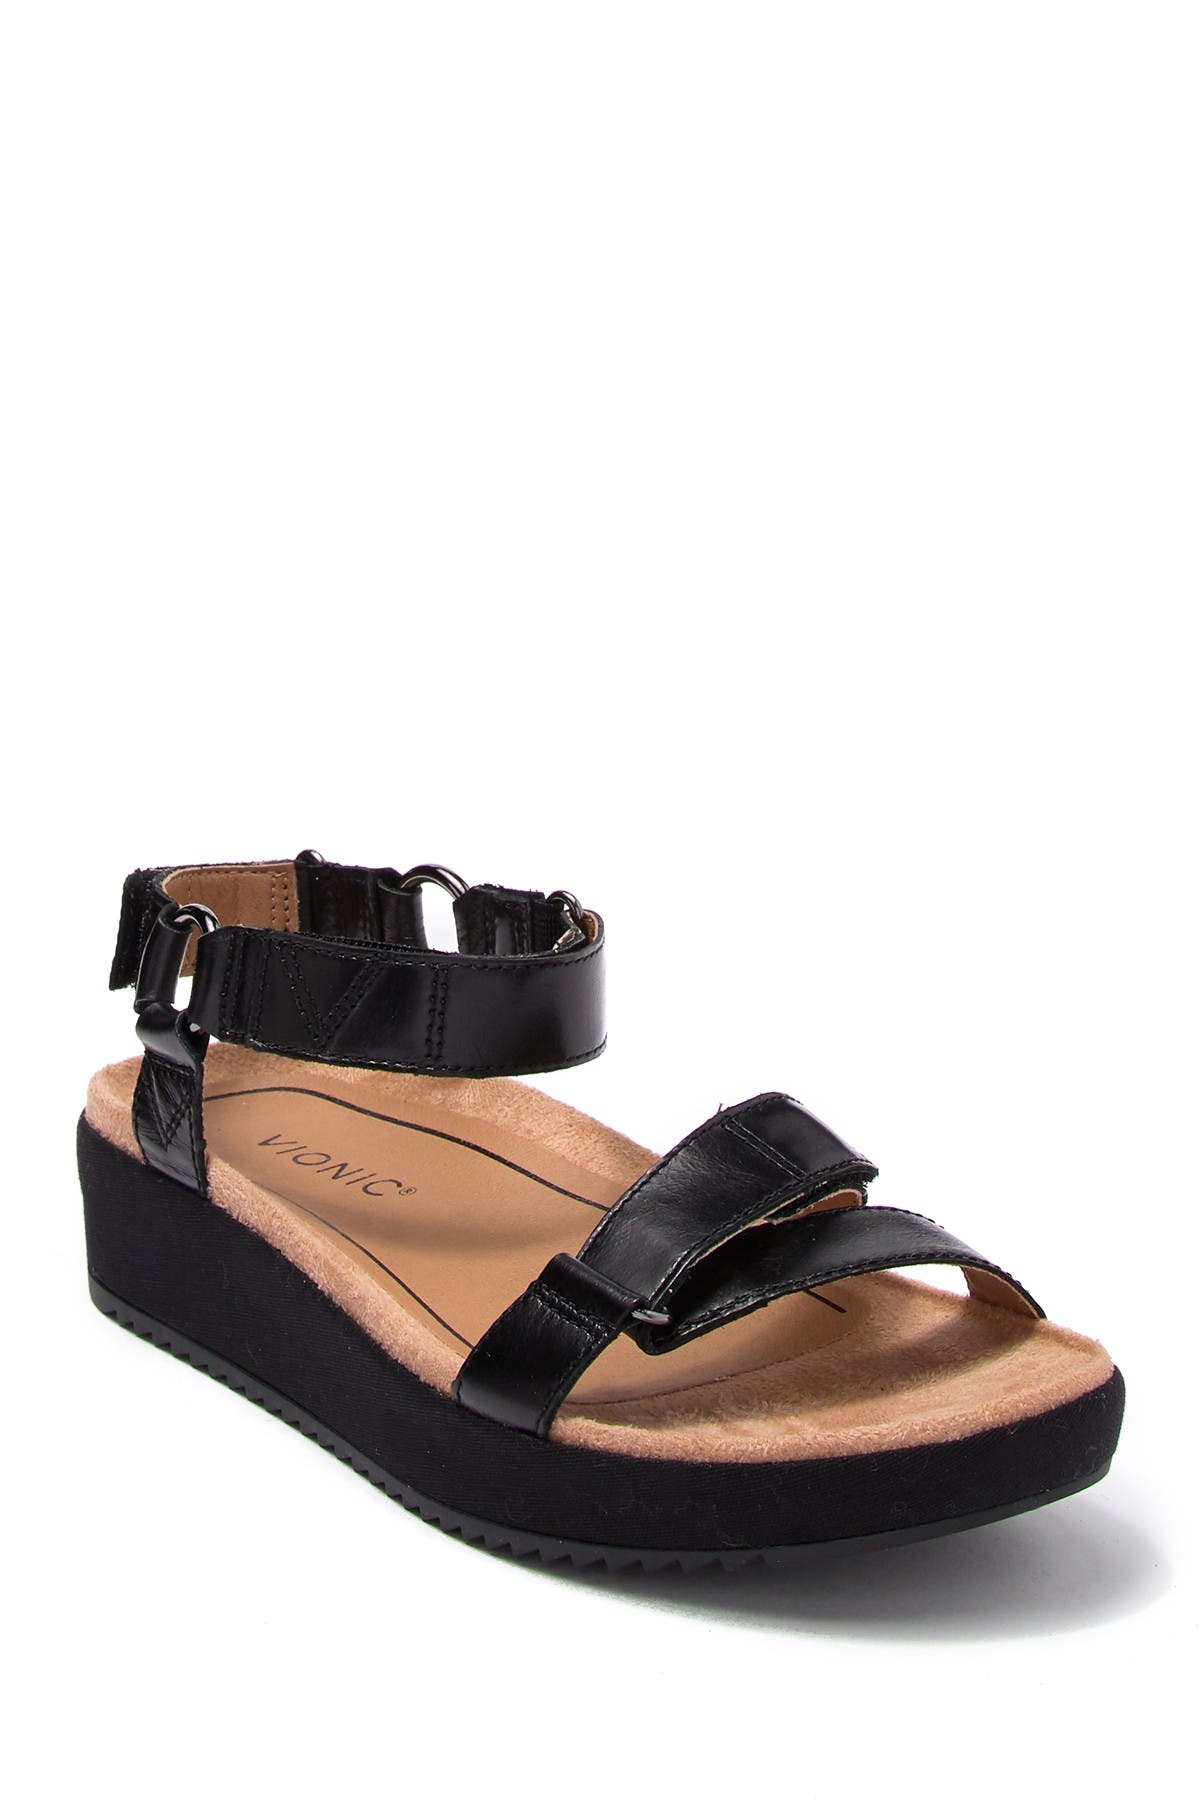 vionic platform leather sandals